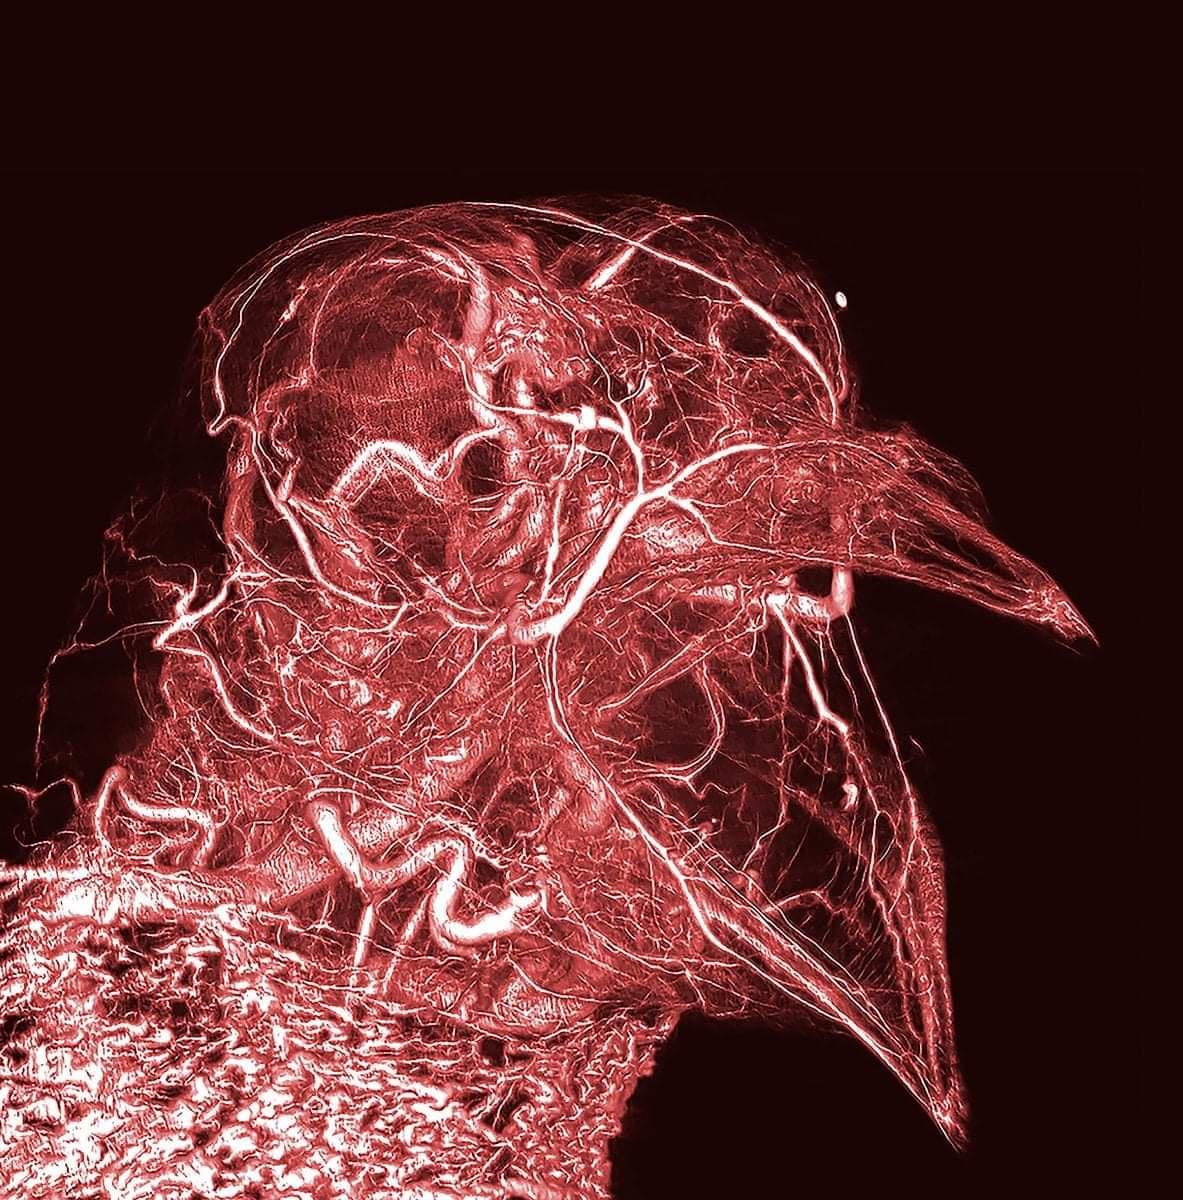 bird blood vessels